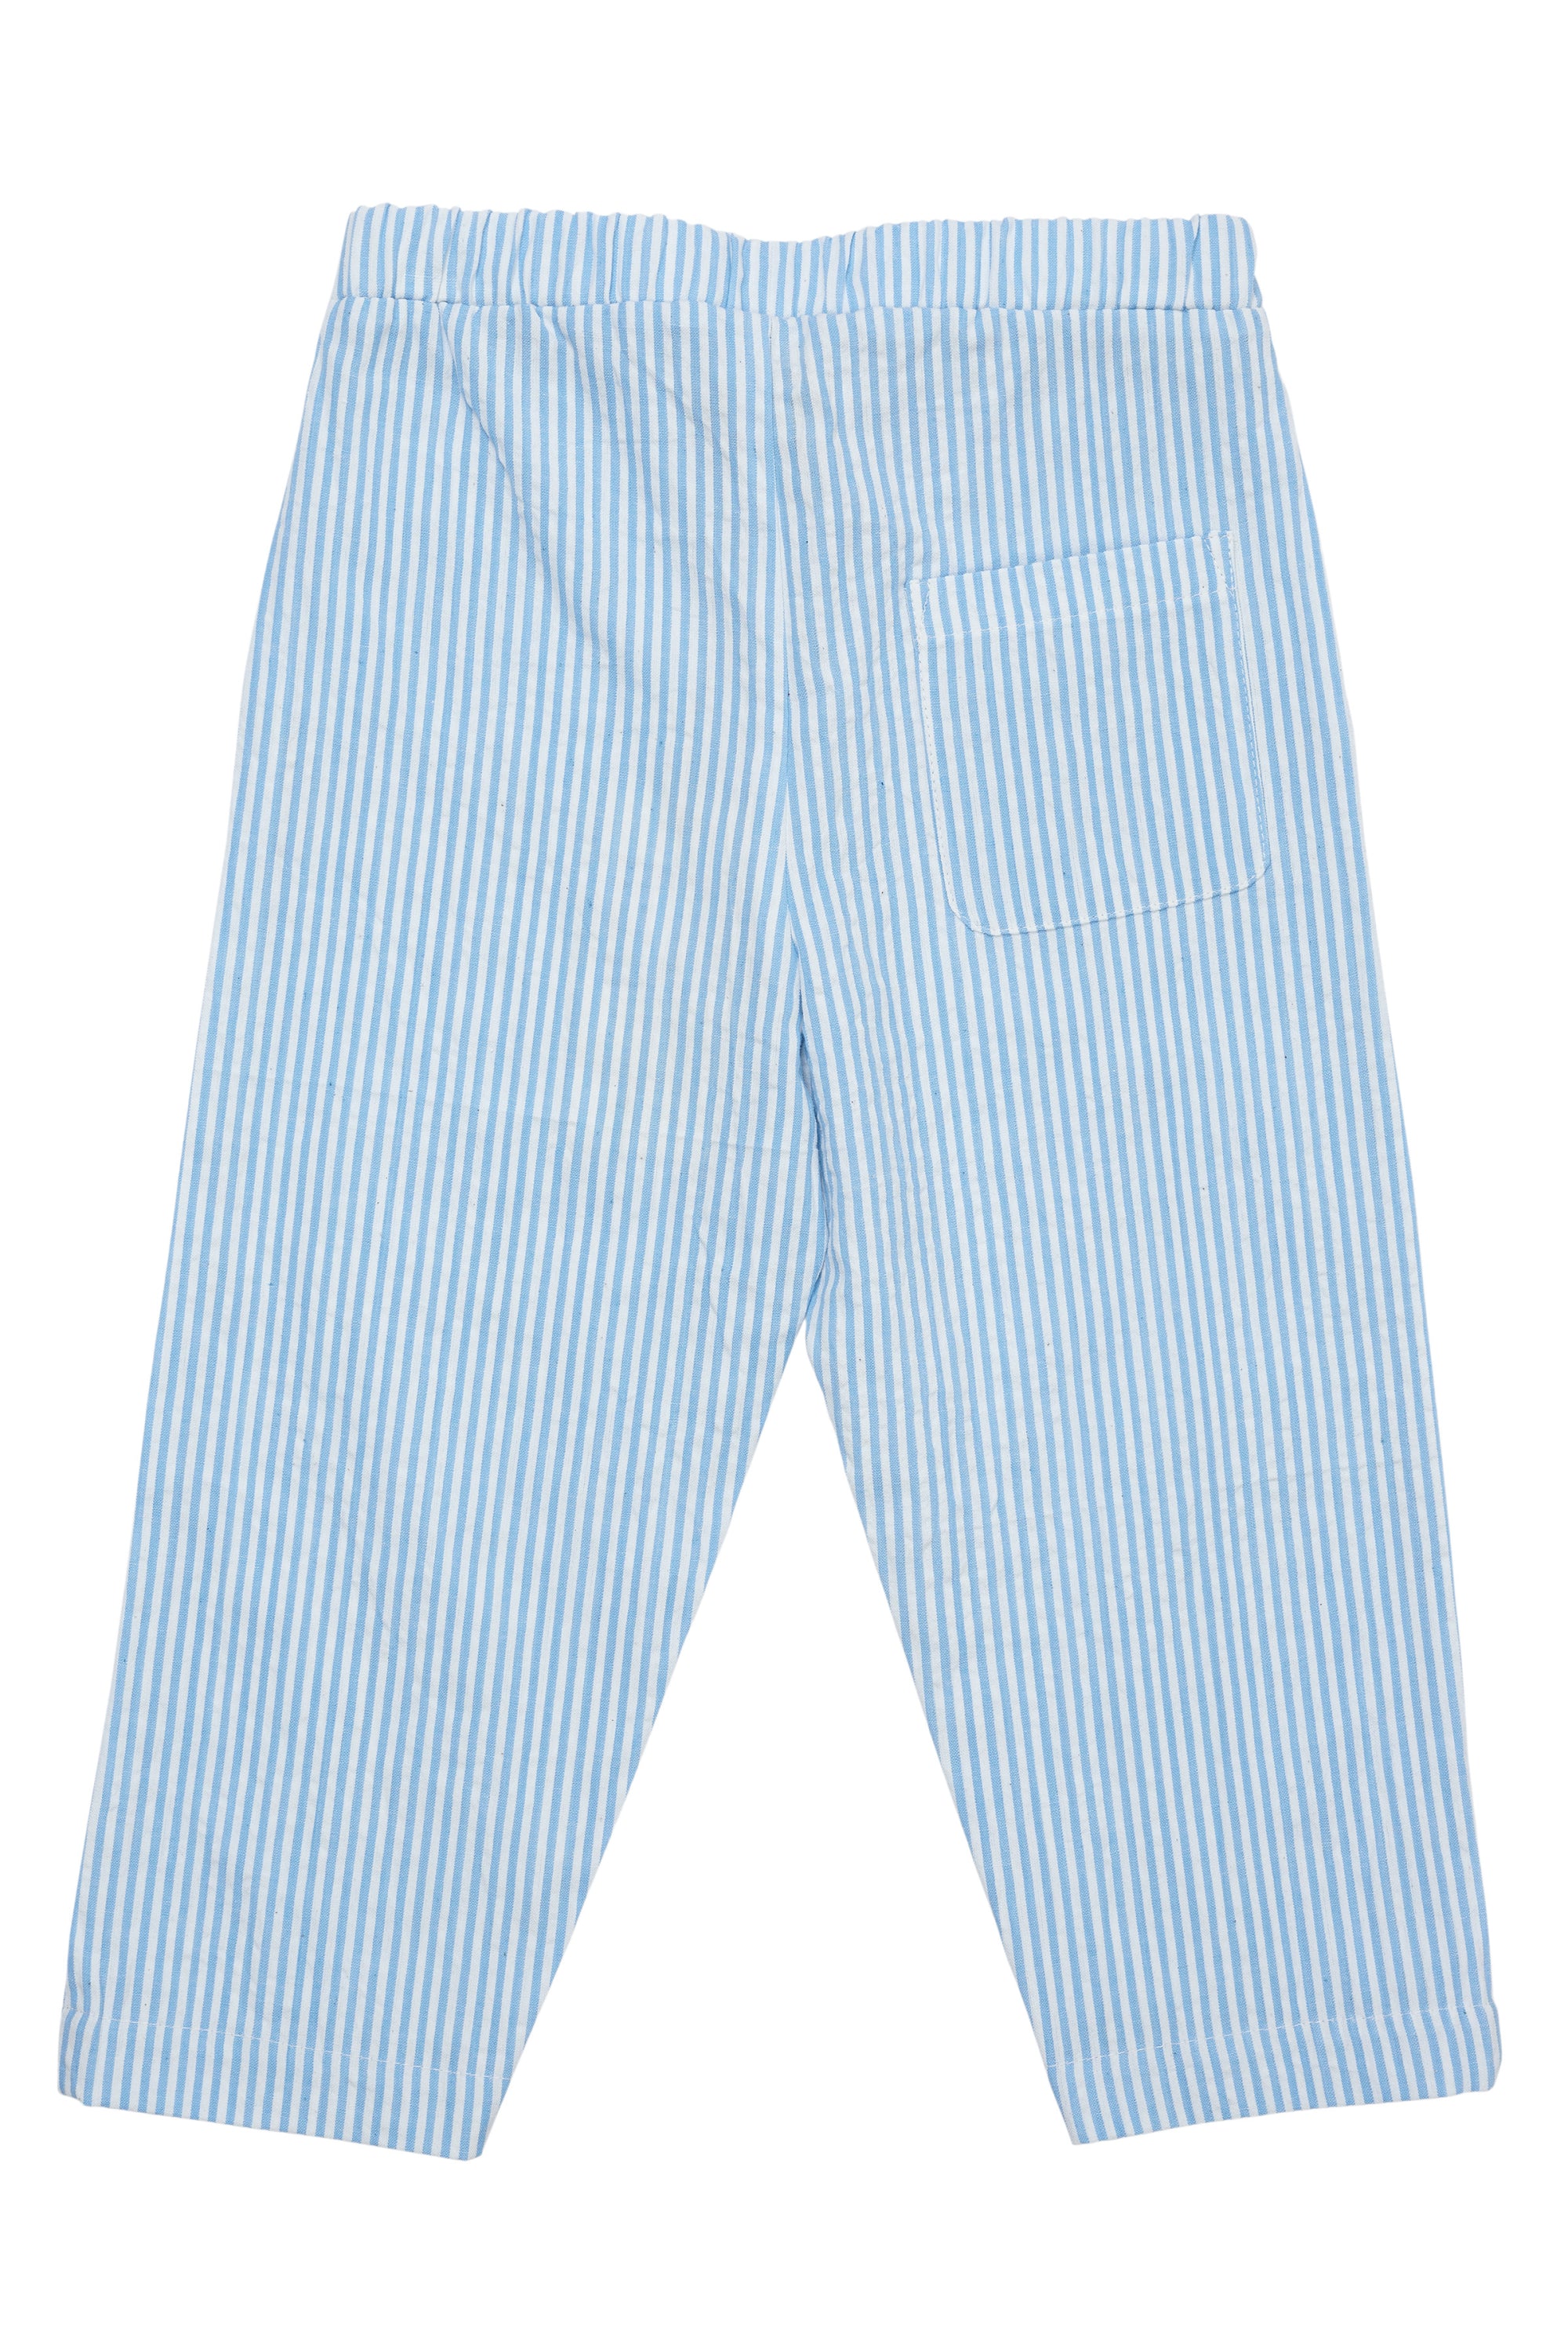 Copenhagen Colors Pants - Sky Blue/Cream stripe